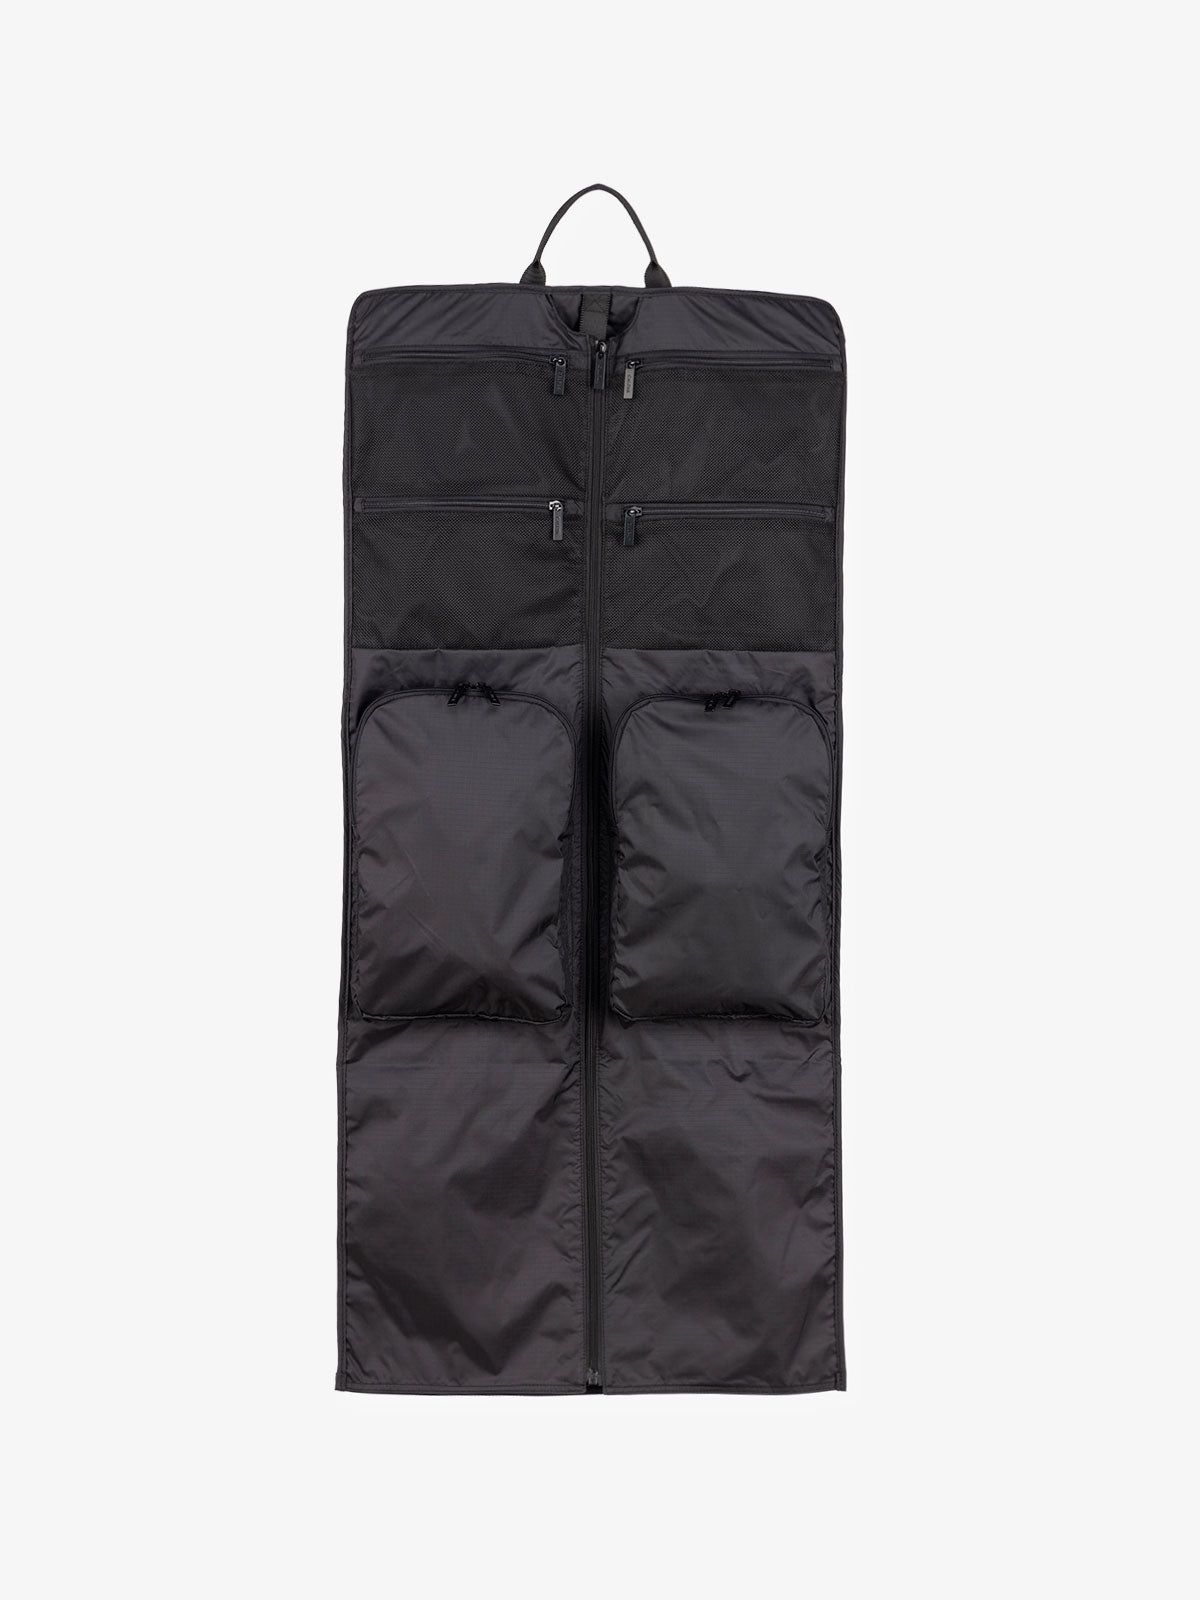 Compakt Small Garment Bag | CALPAK